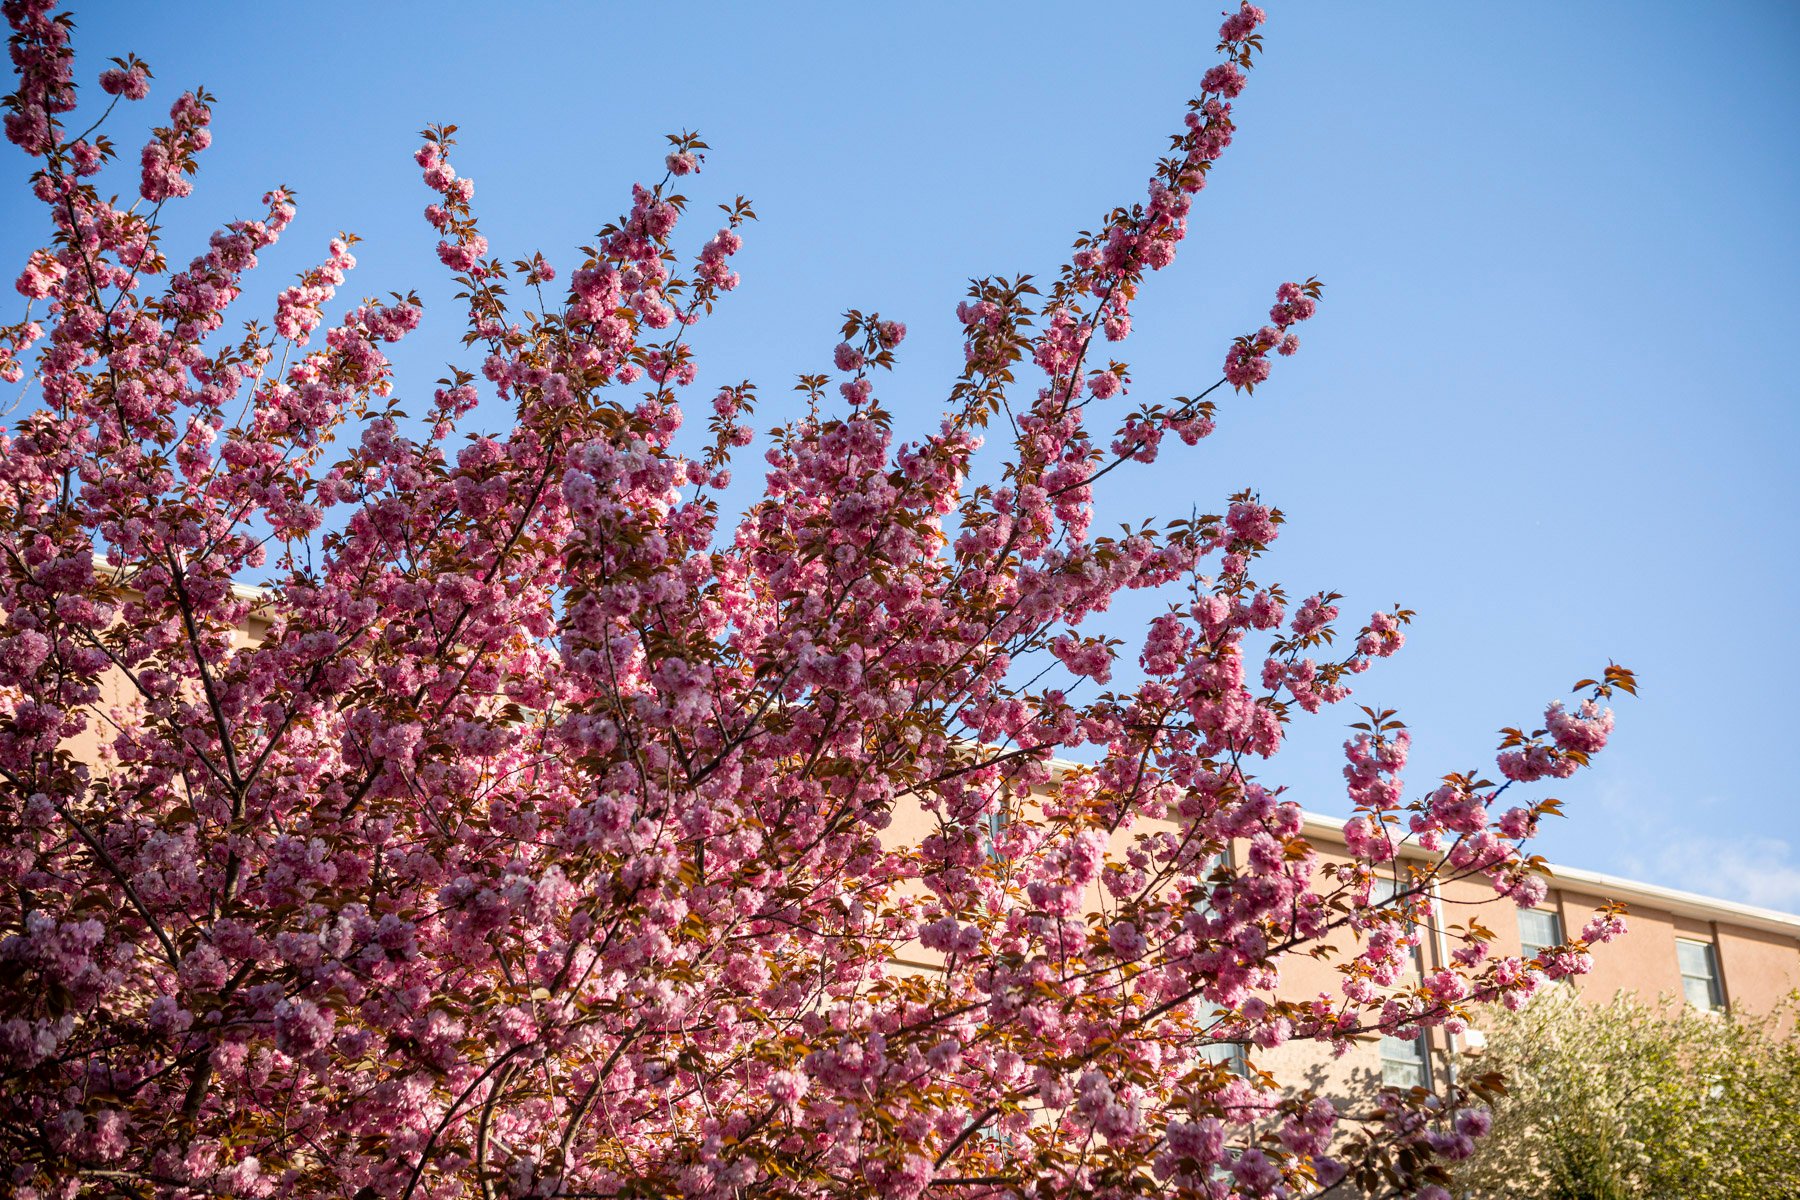 flowering redbud tree with pink flowers in spring